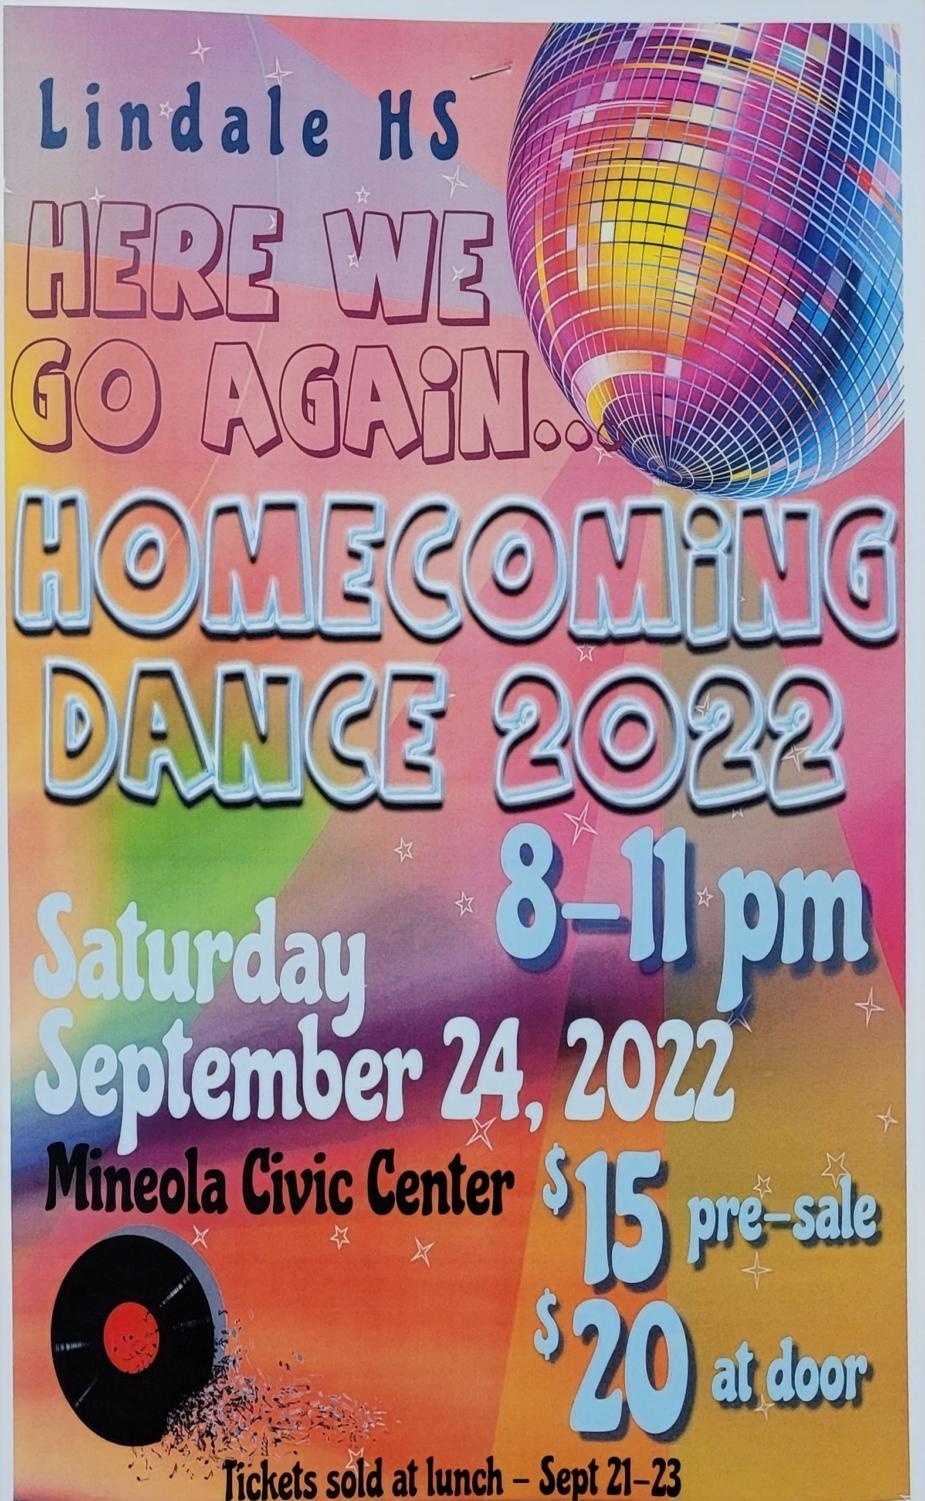 homecoming dance flyer